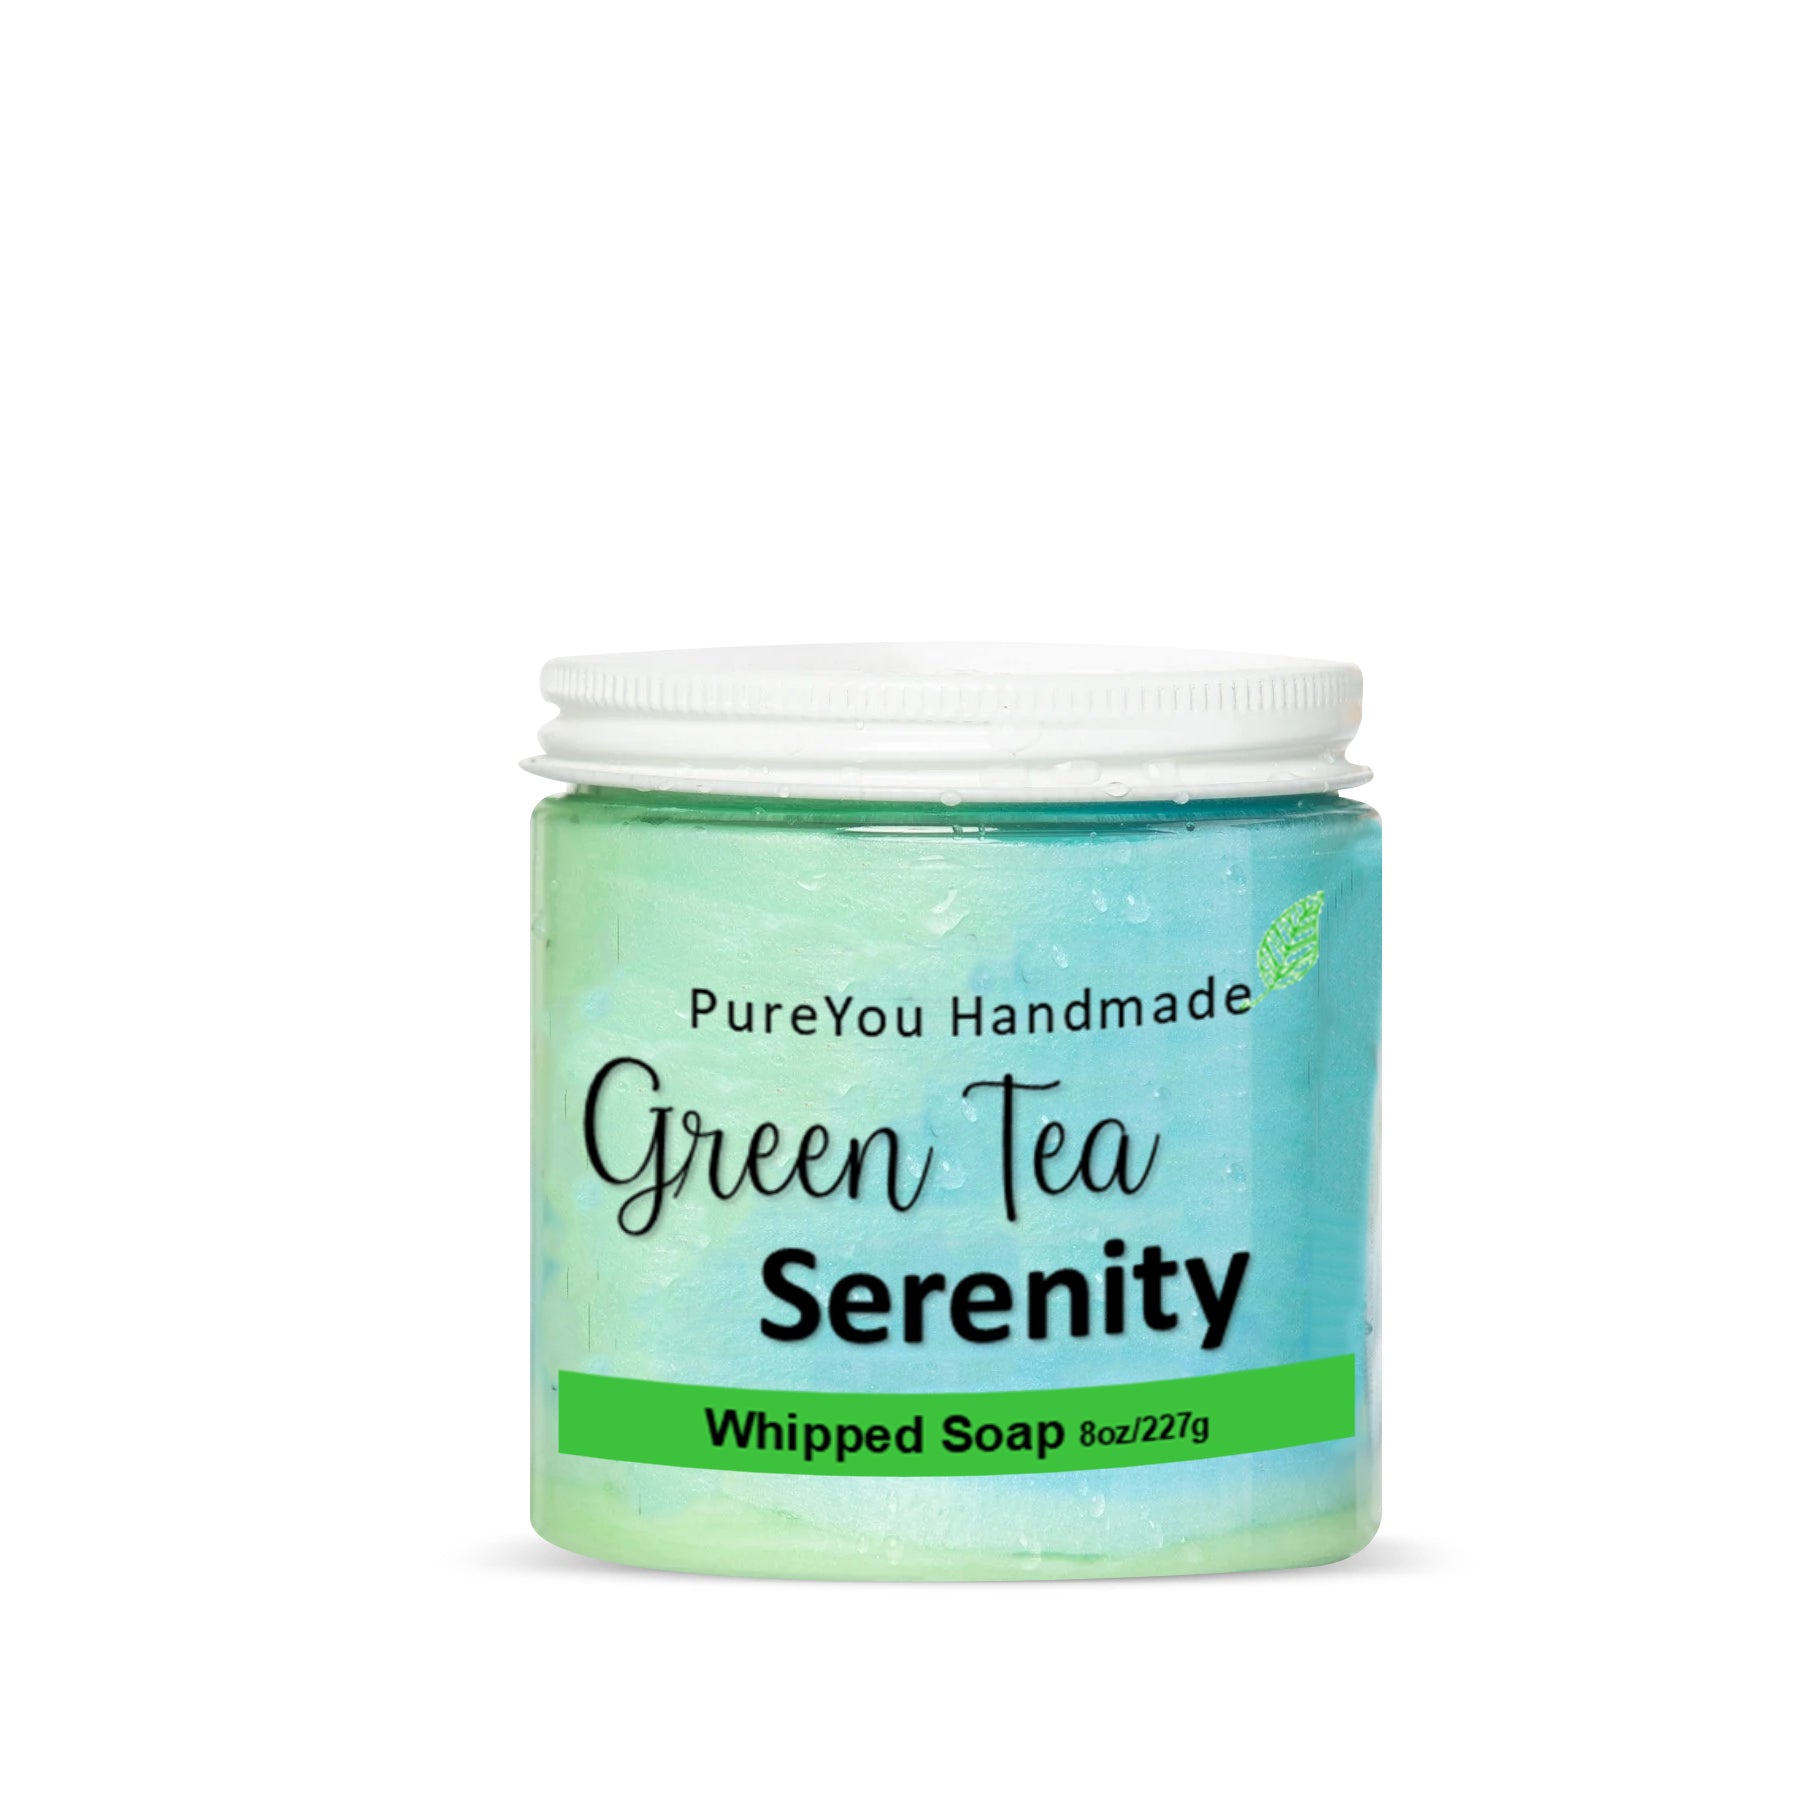 Green Tea Serenity Whipped Soap